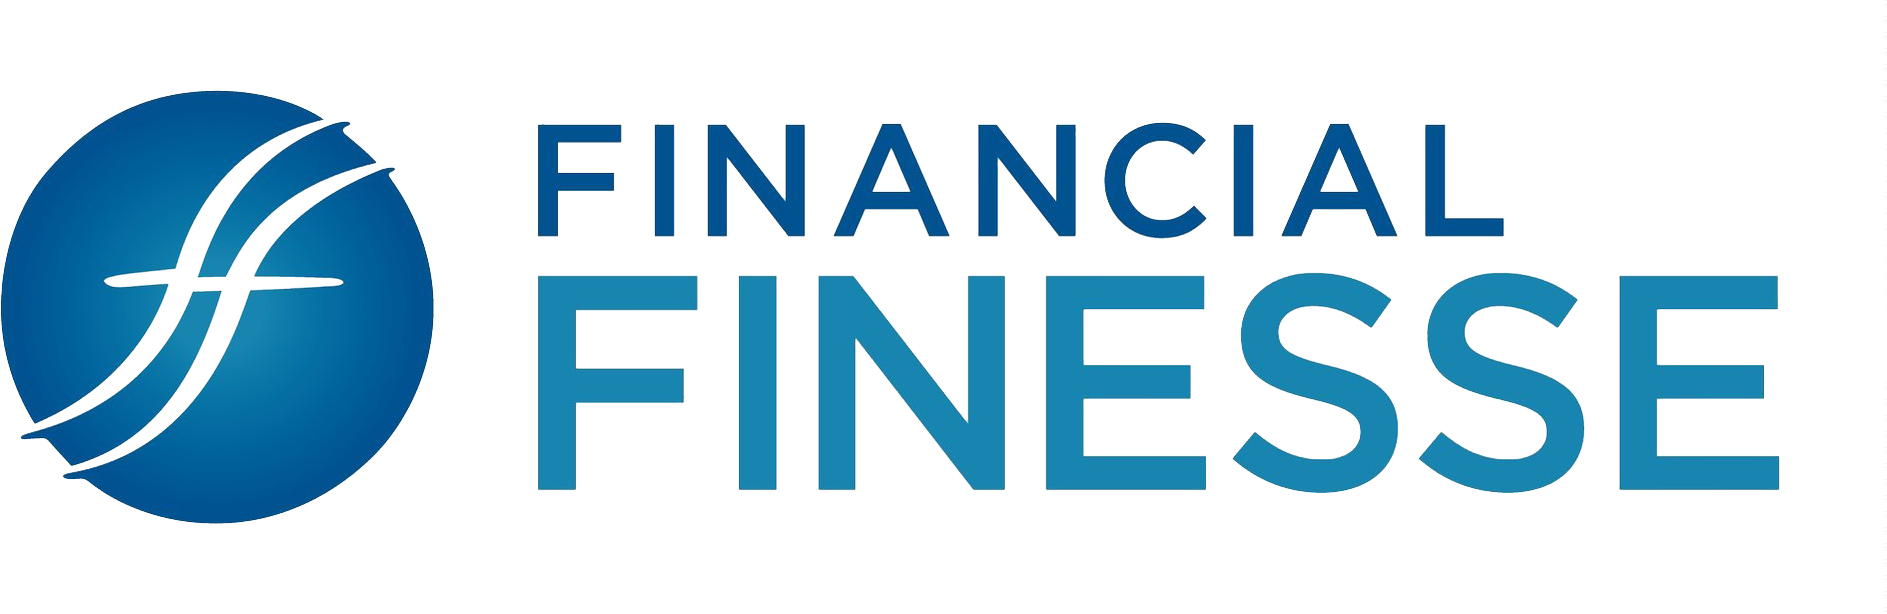 Financial_Finesse_Logo